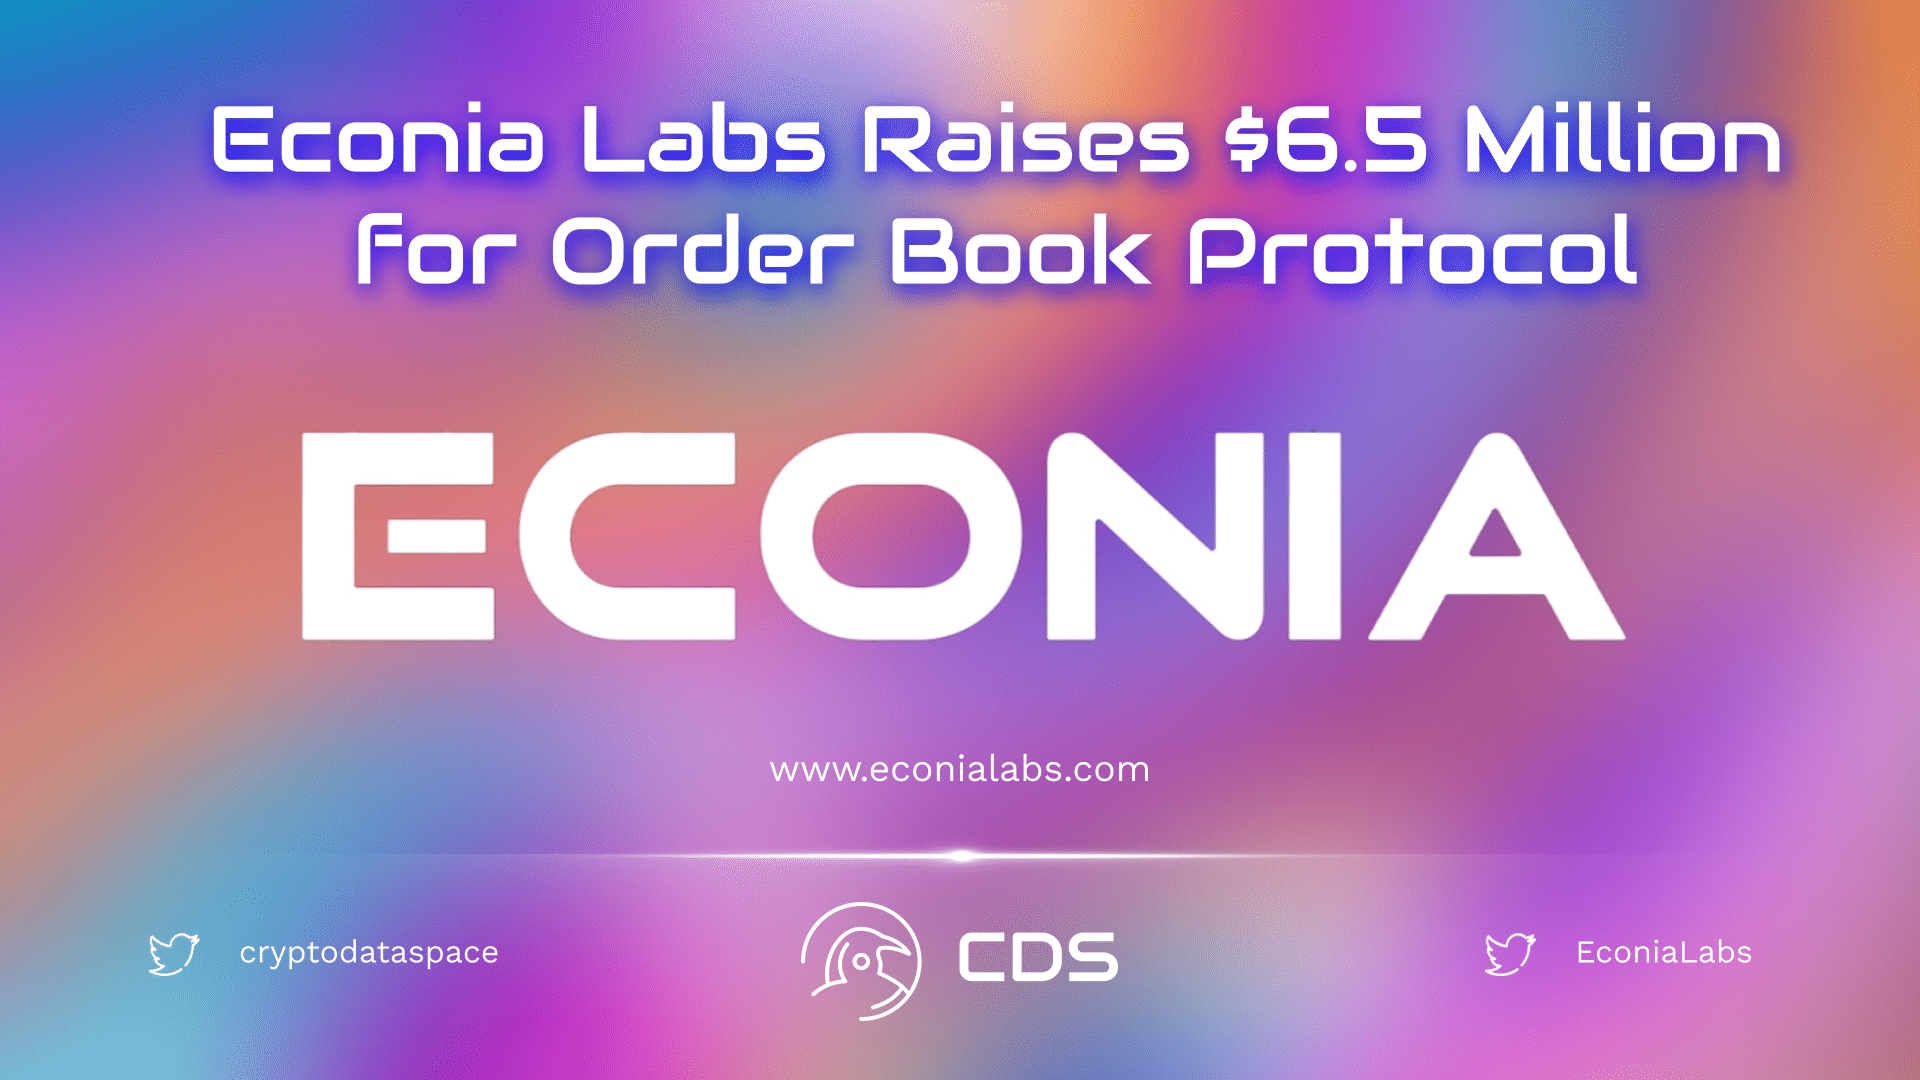 Econia Labs Raises $6.5 Million for Order Book Protocol